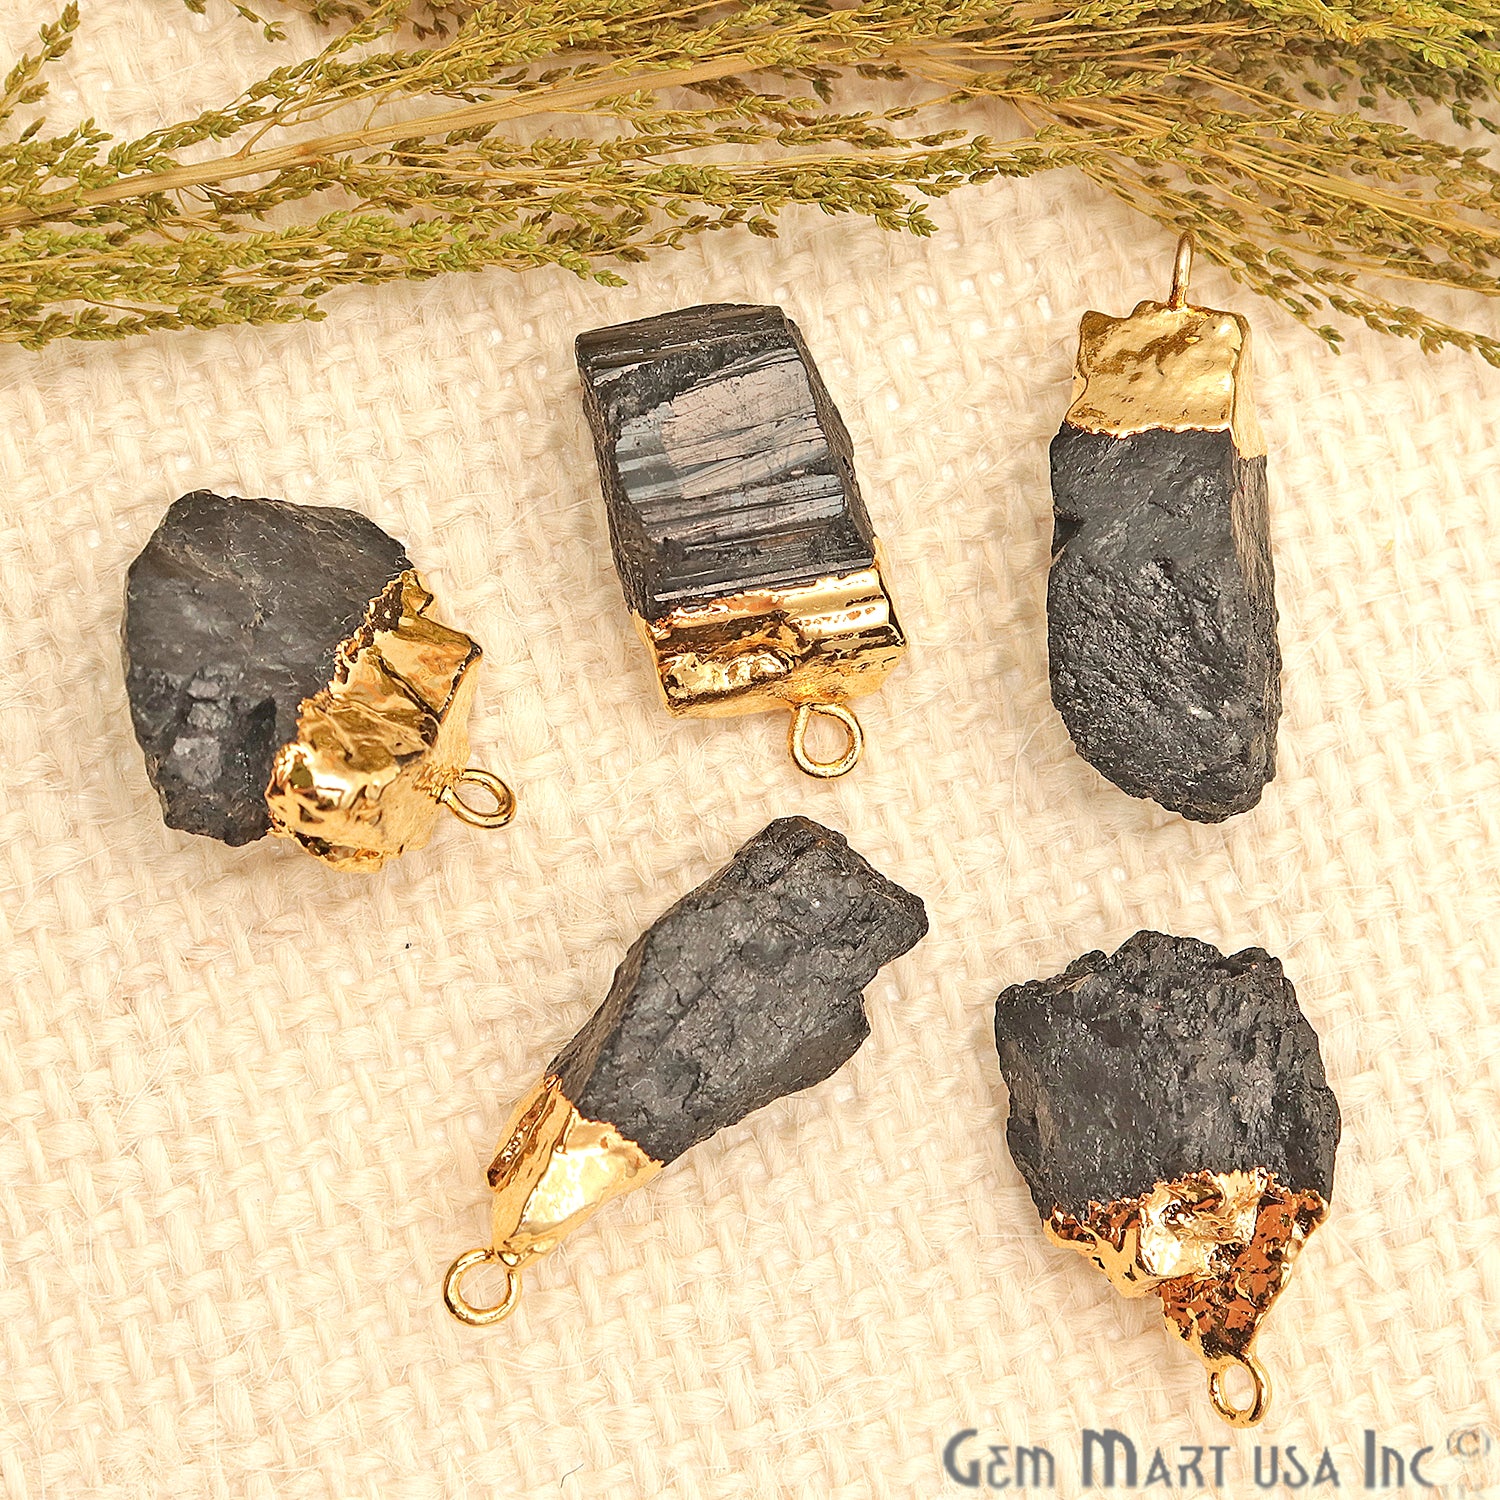 Rough Black Tourmaline Gemstone 20x10mm Gold Edged Bracelets Connector - GemMartUSA